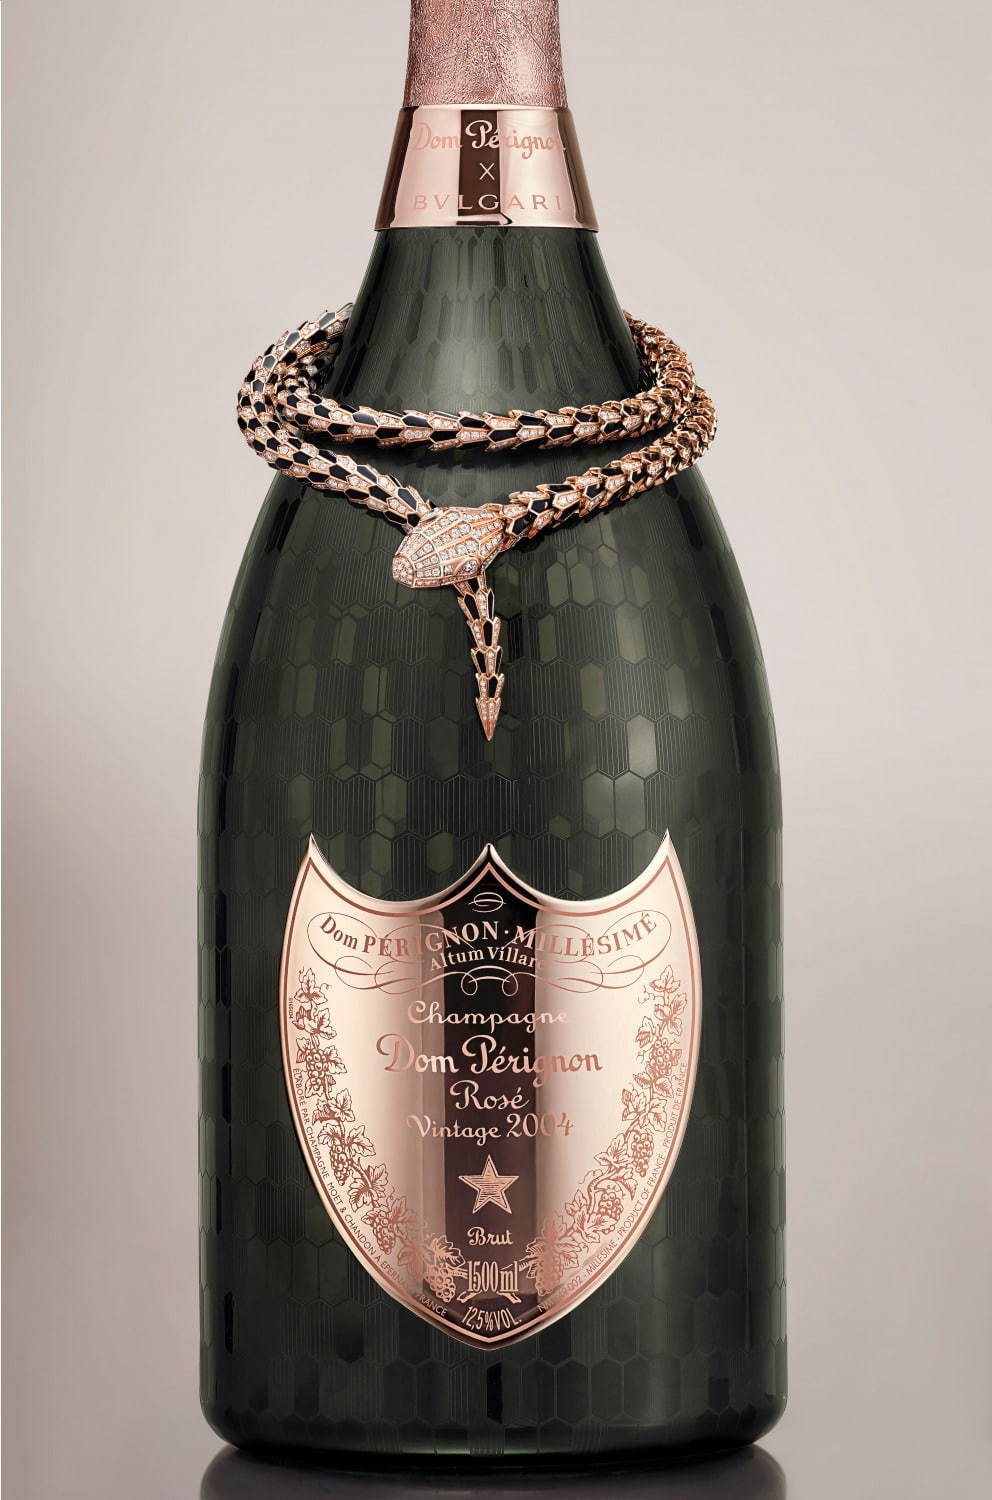 BVLGARI シャンパン | www.sochilaguna.ru